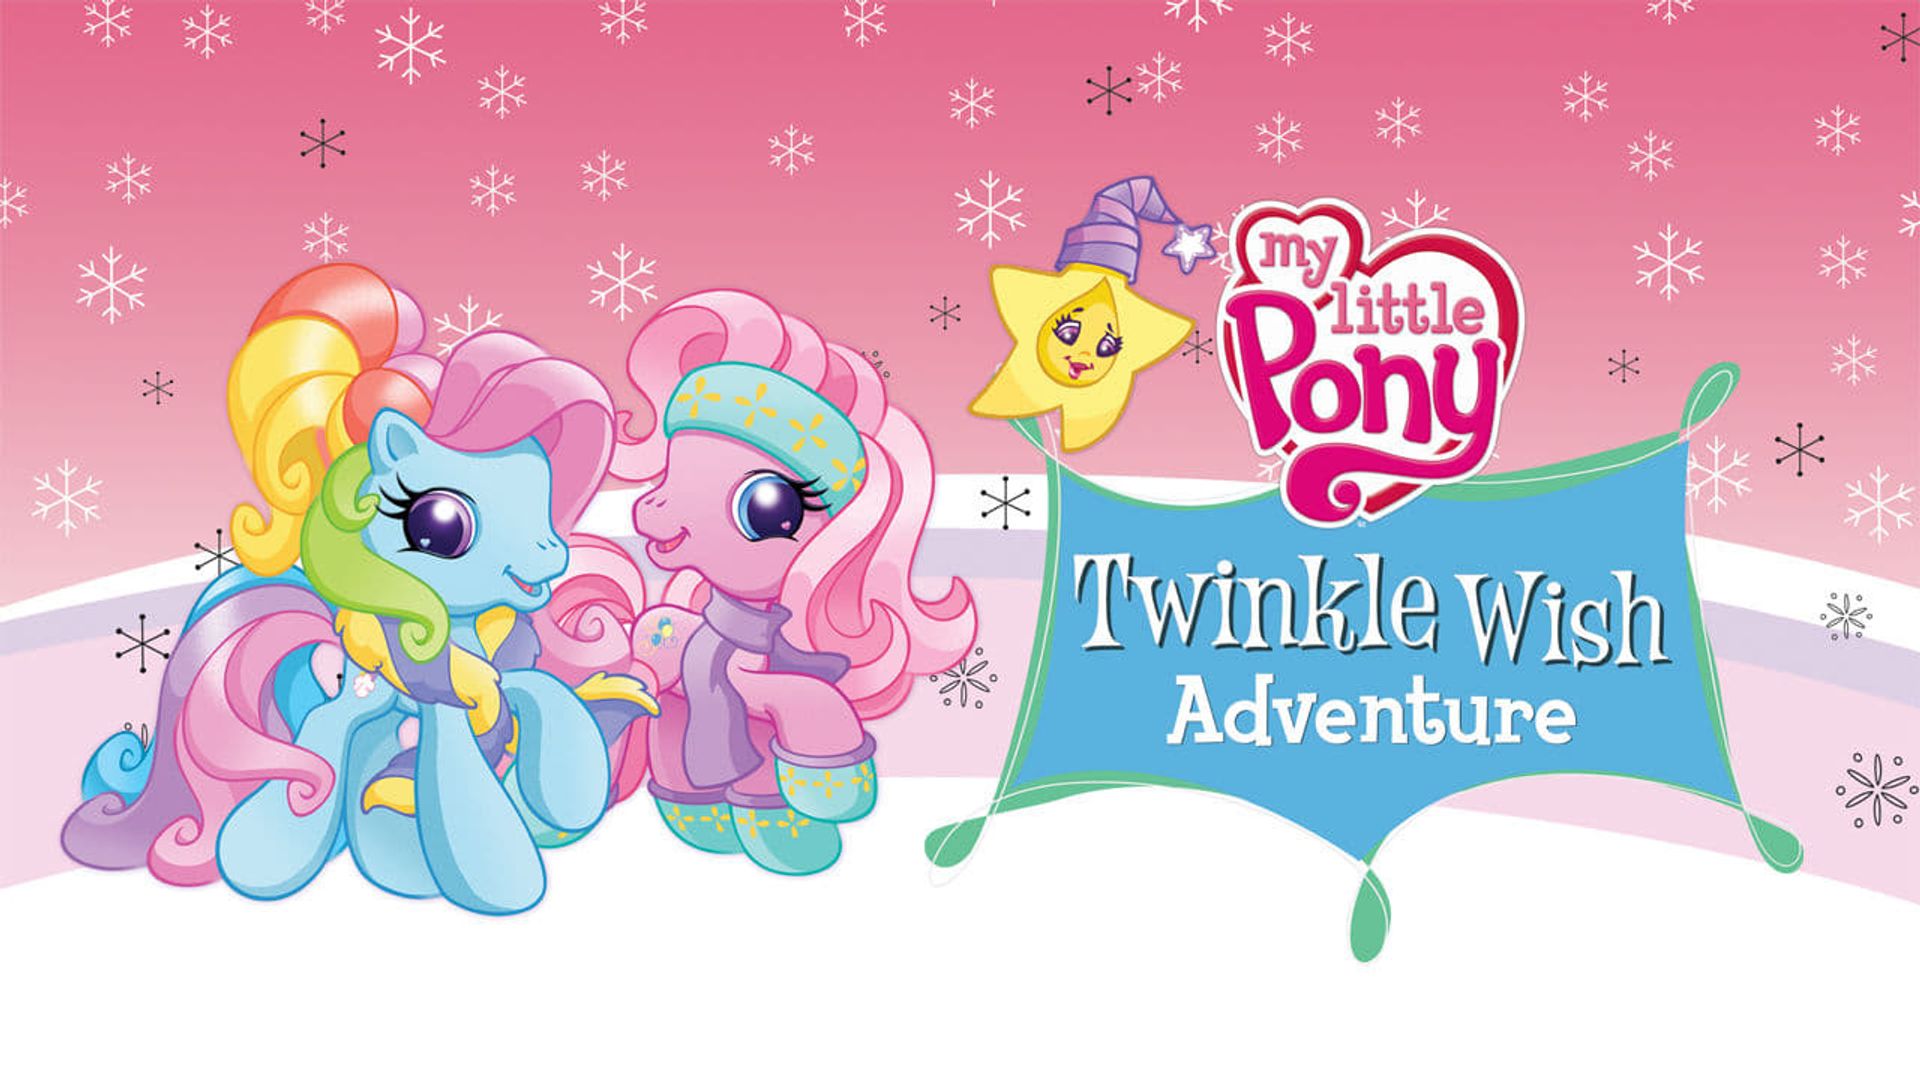 My Little Pony: Twinkle Wish Adventure background